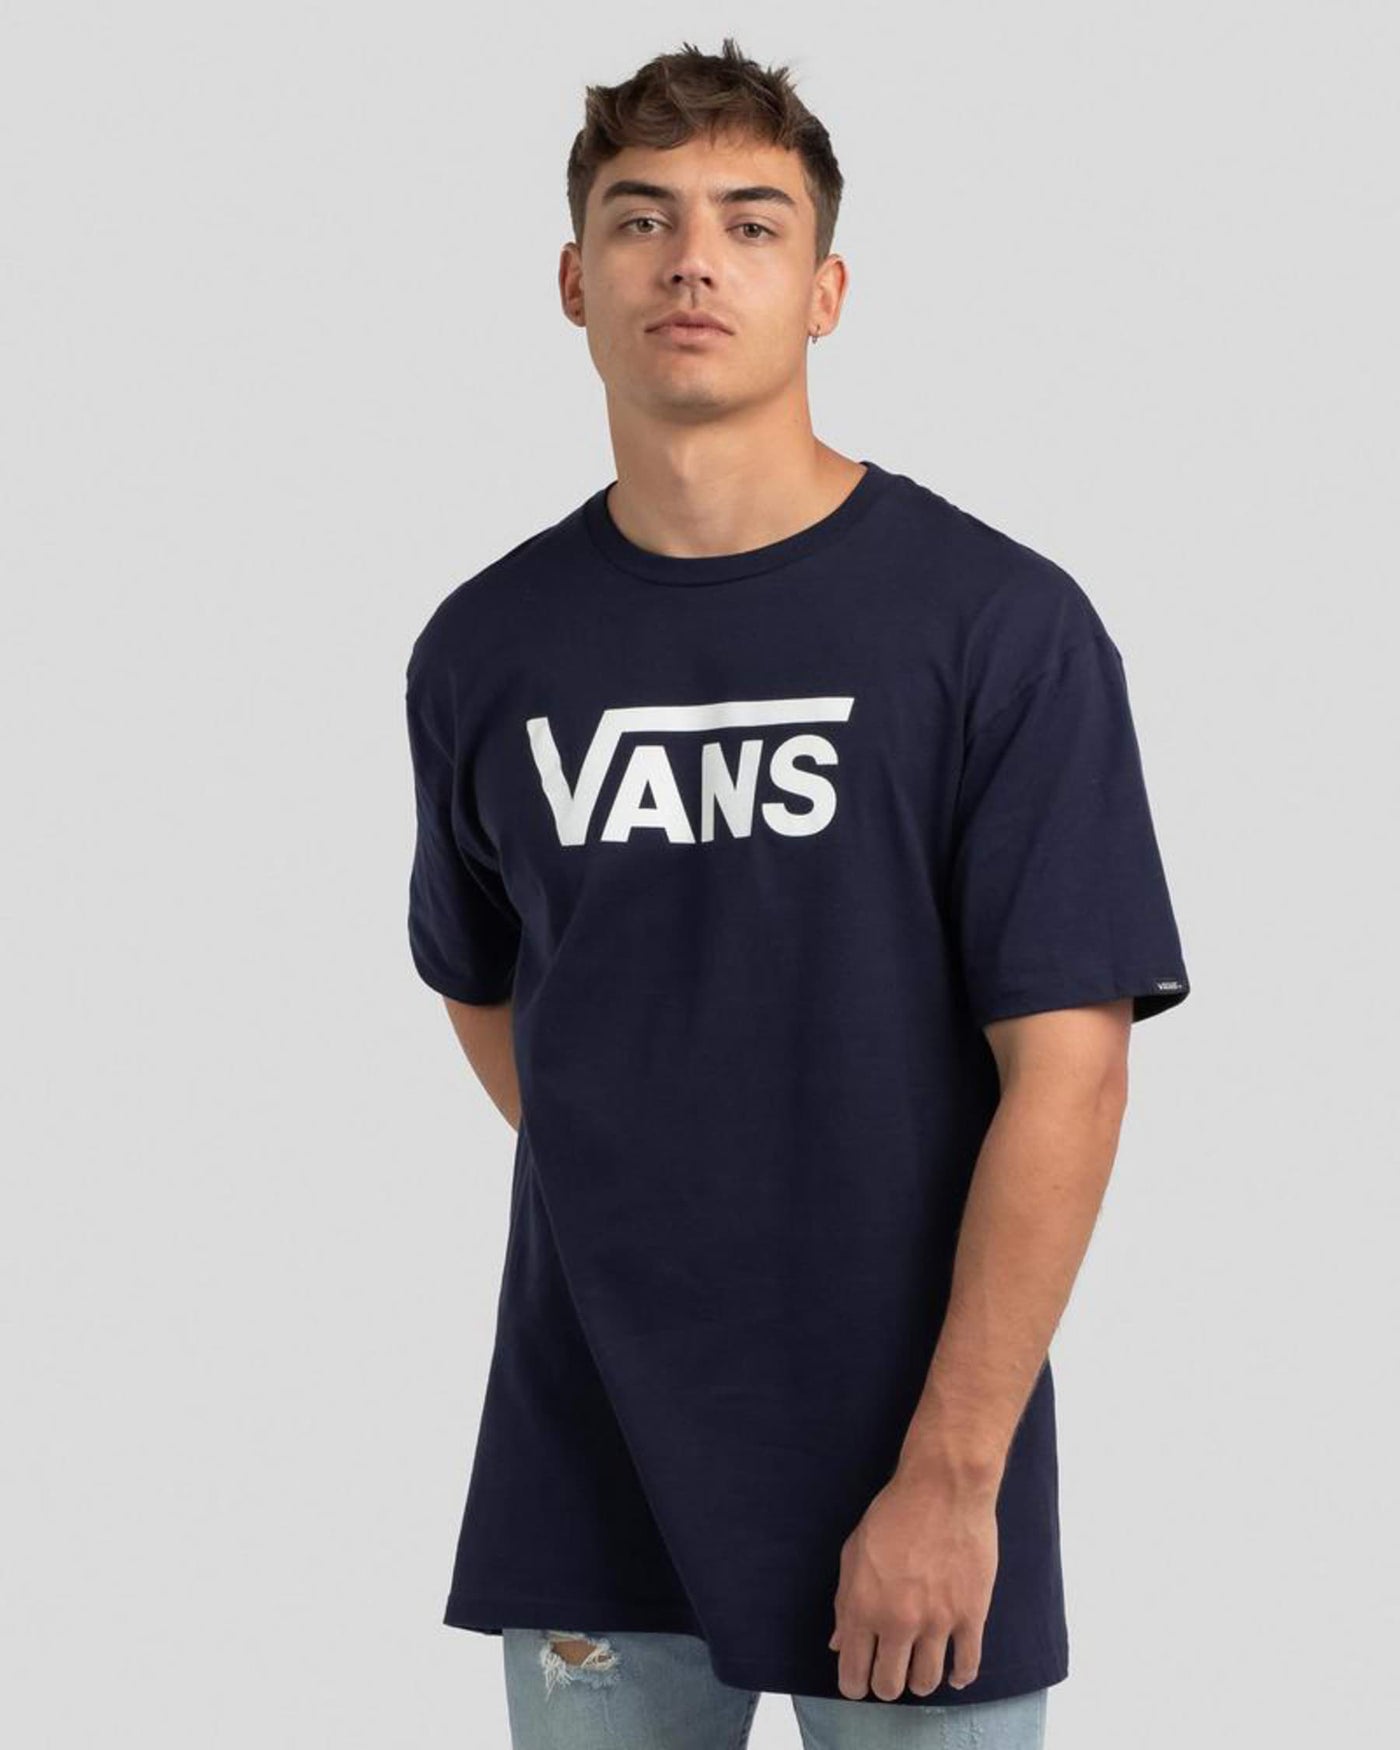 Vans Classic Tee - Navy/White